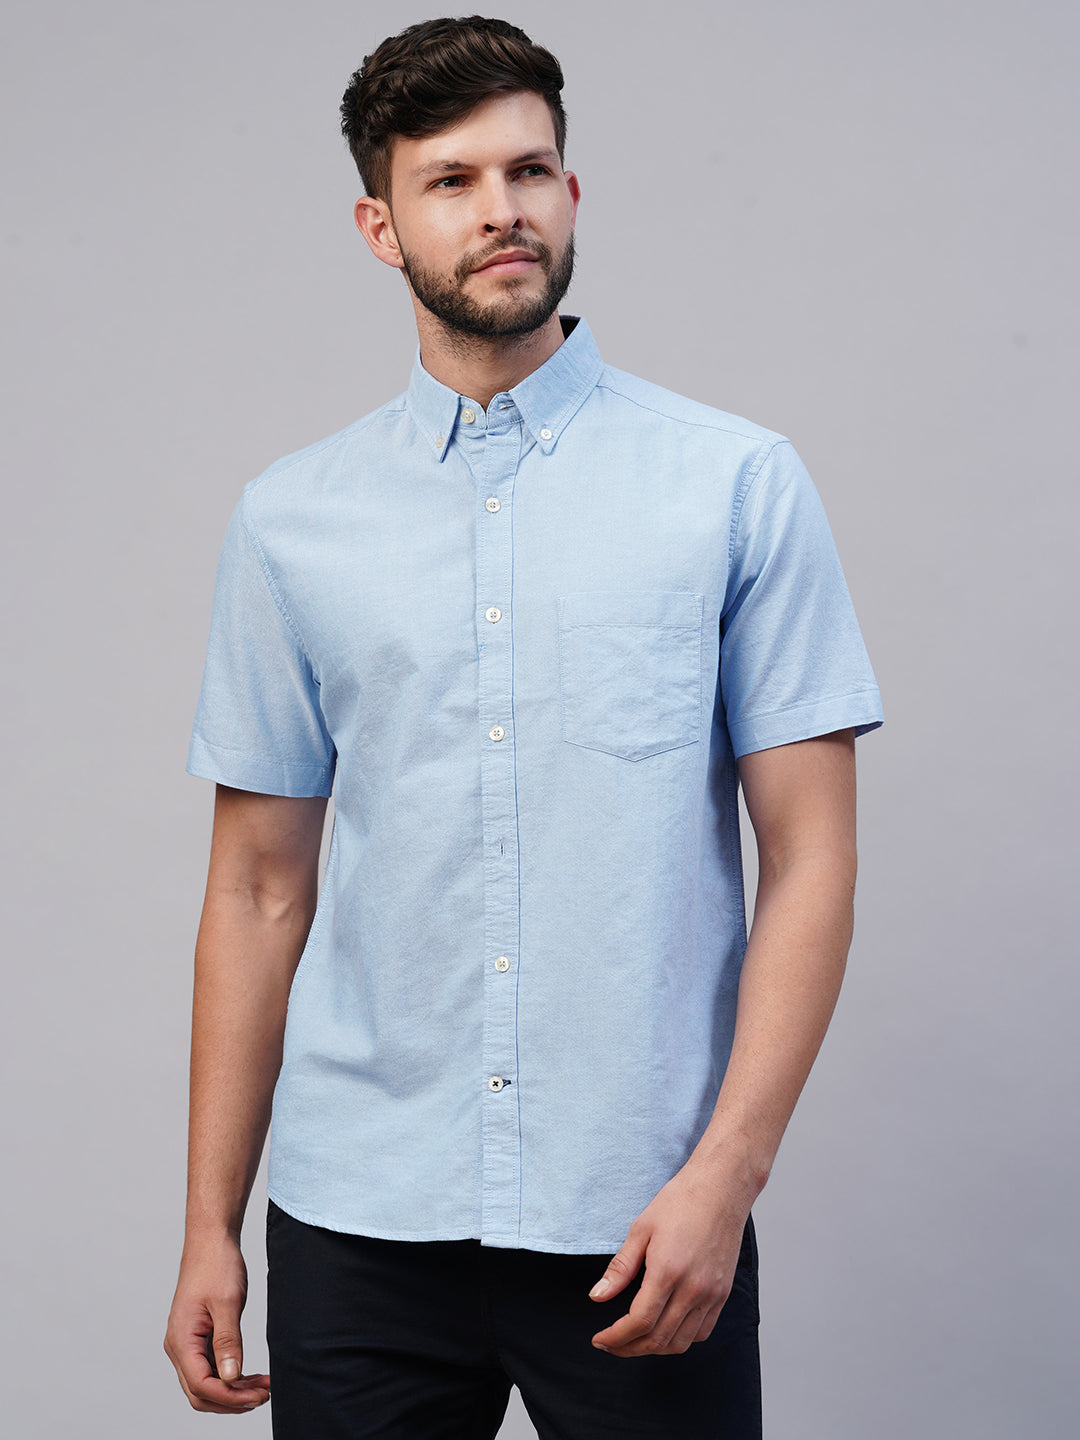 Men's Blue Oxford Cotton Regular Fit Shirts